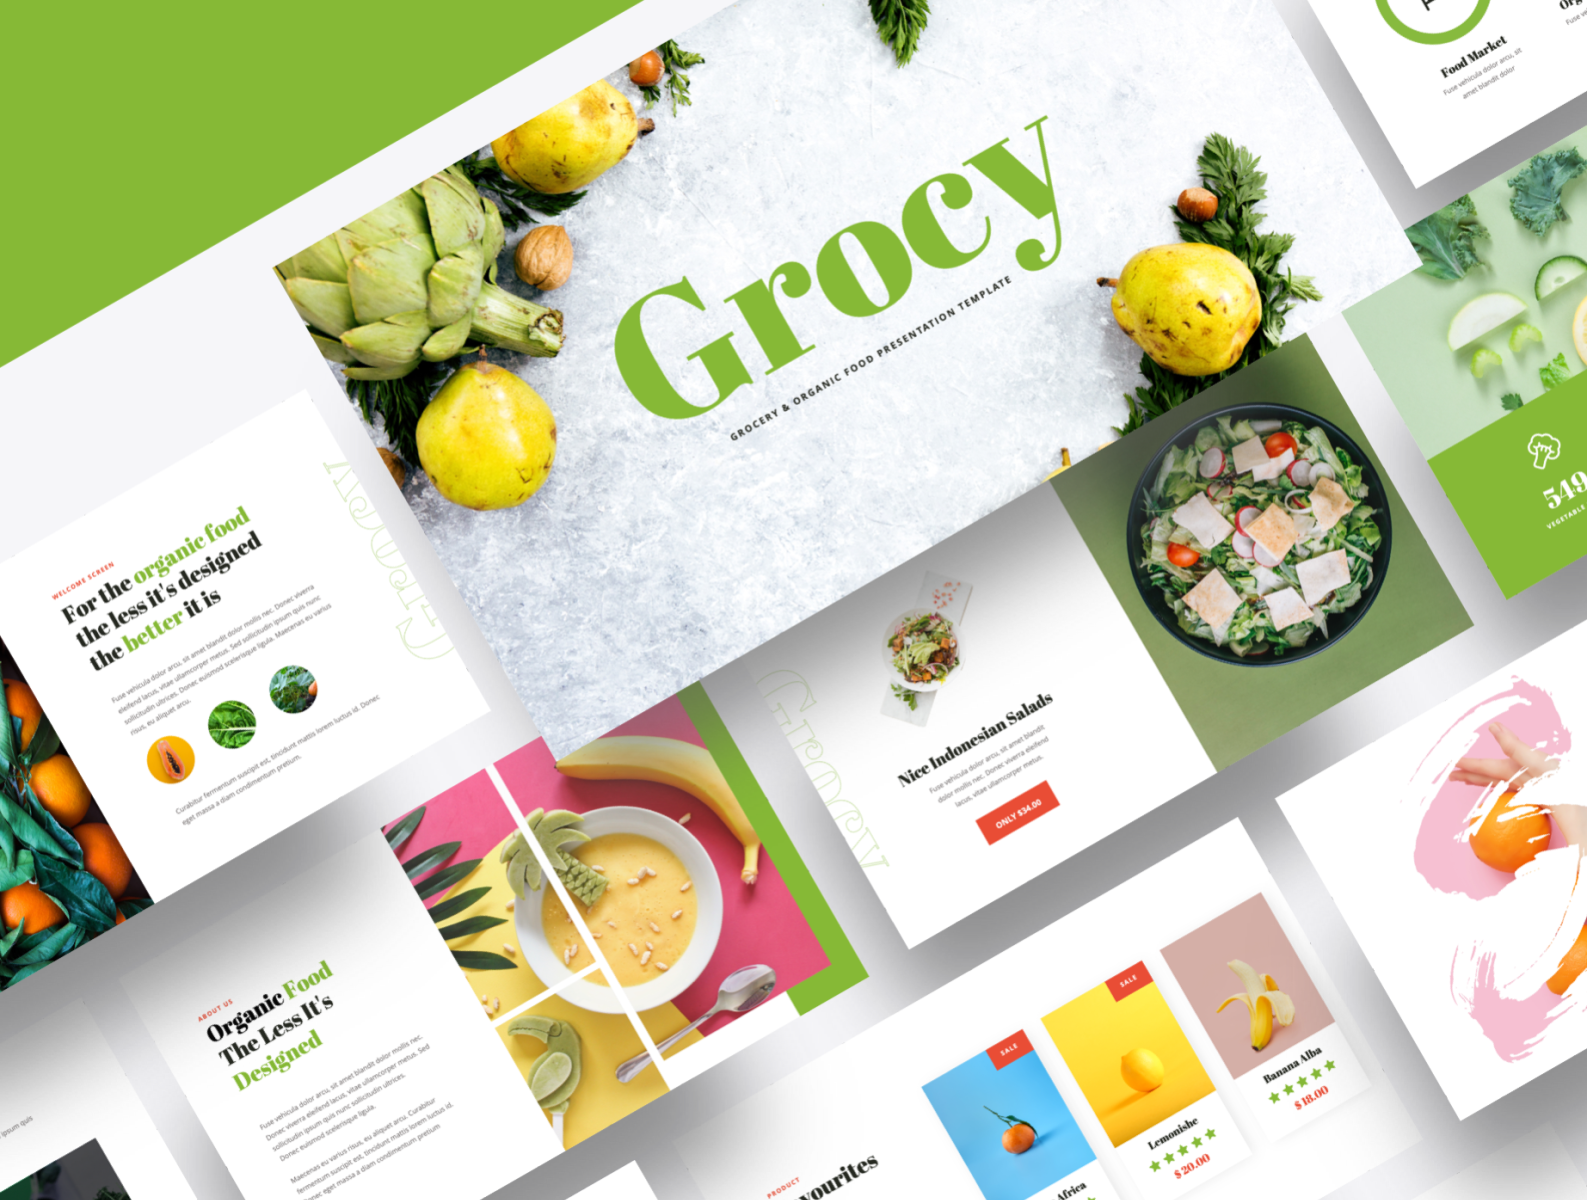 Grocy – Grocery & Organic Food Powerpoint Template by Masdika Studio on  Dribbble